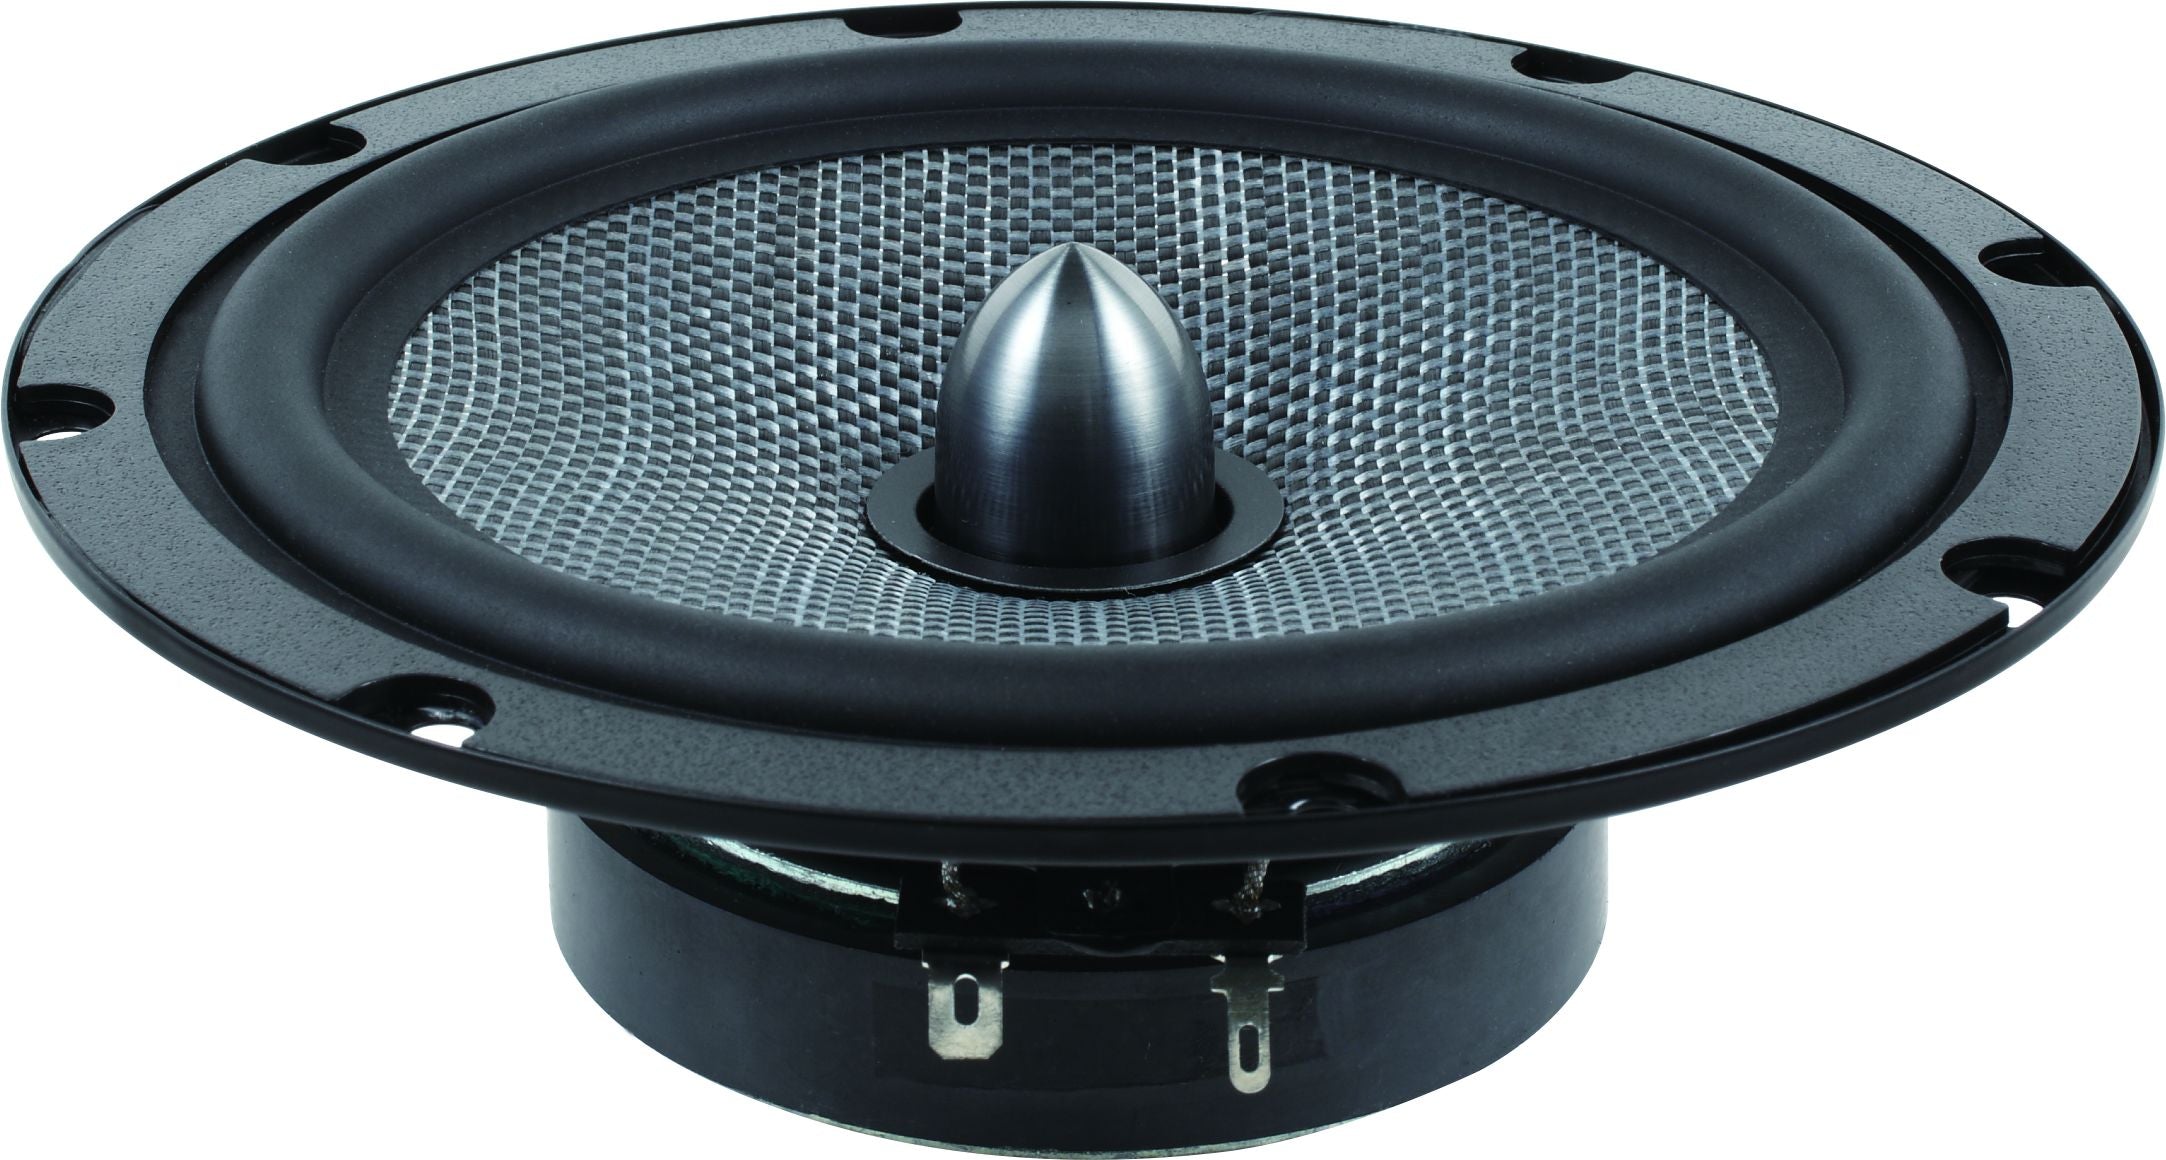 ATG ATG-TS65C - ATG Audio Transcend Series 6.5" Component Speakers